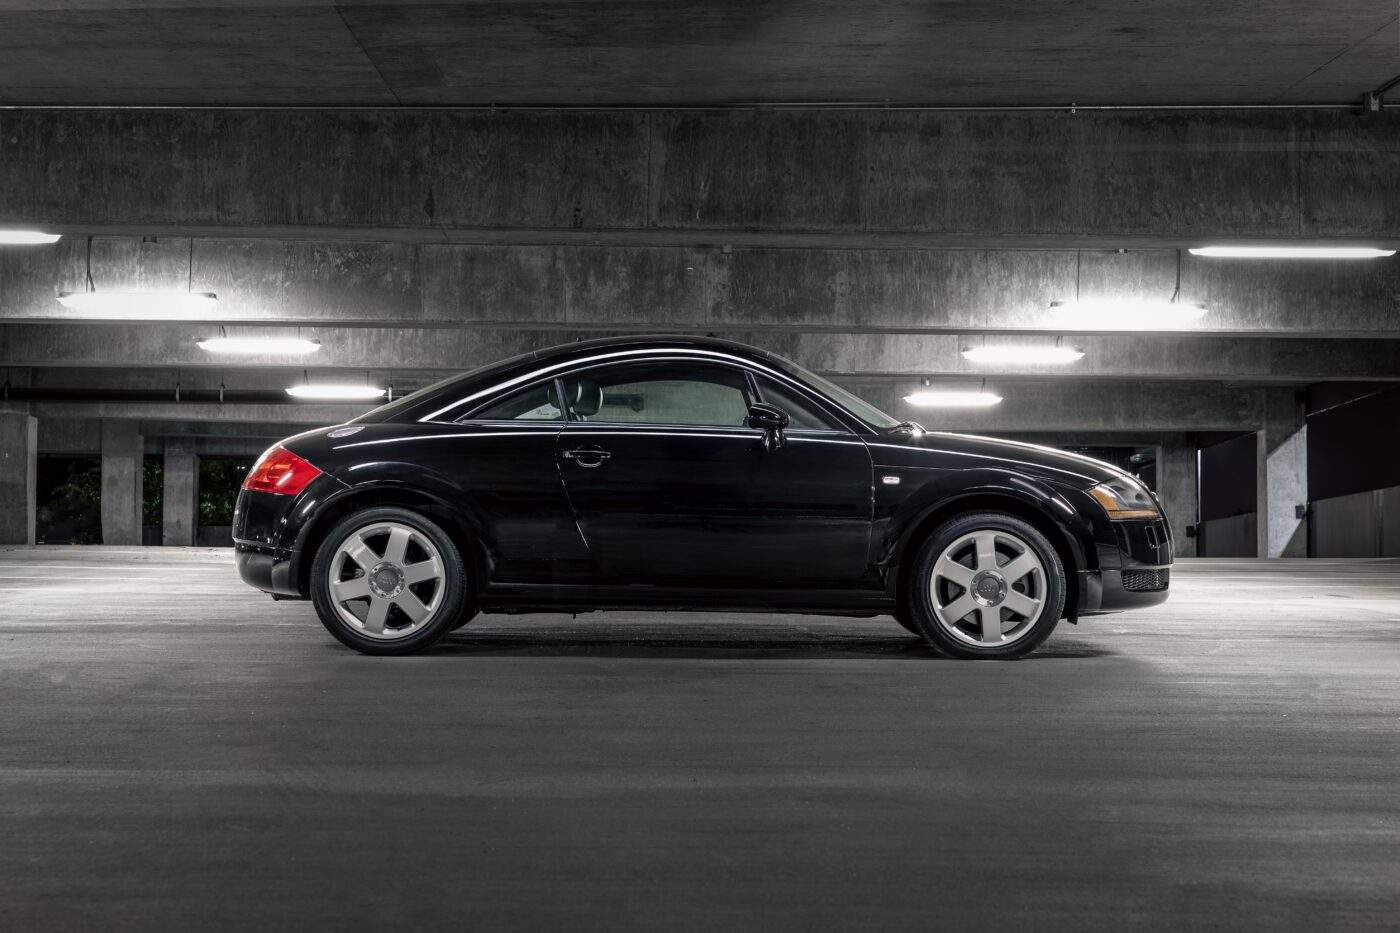 An Audi TT parked in a parking garage at night.